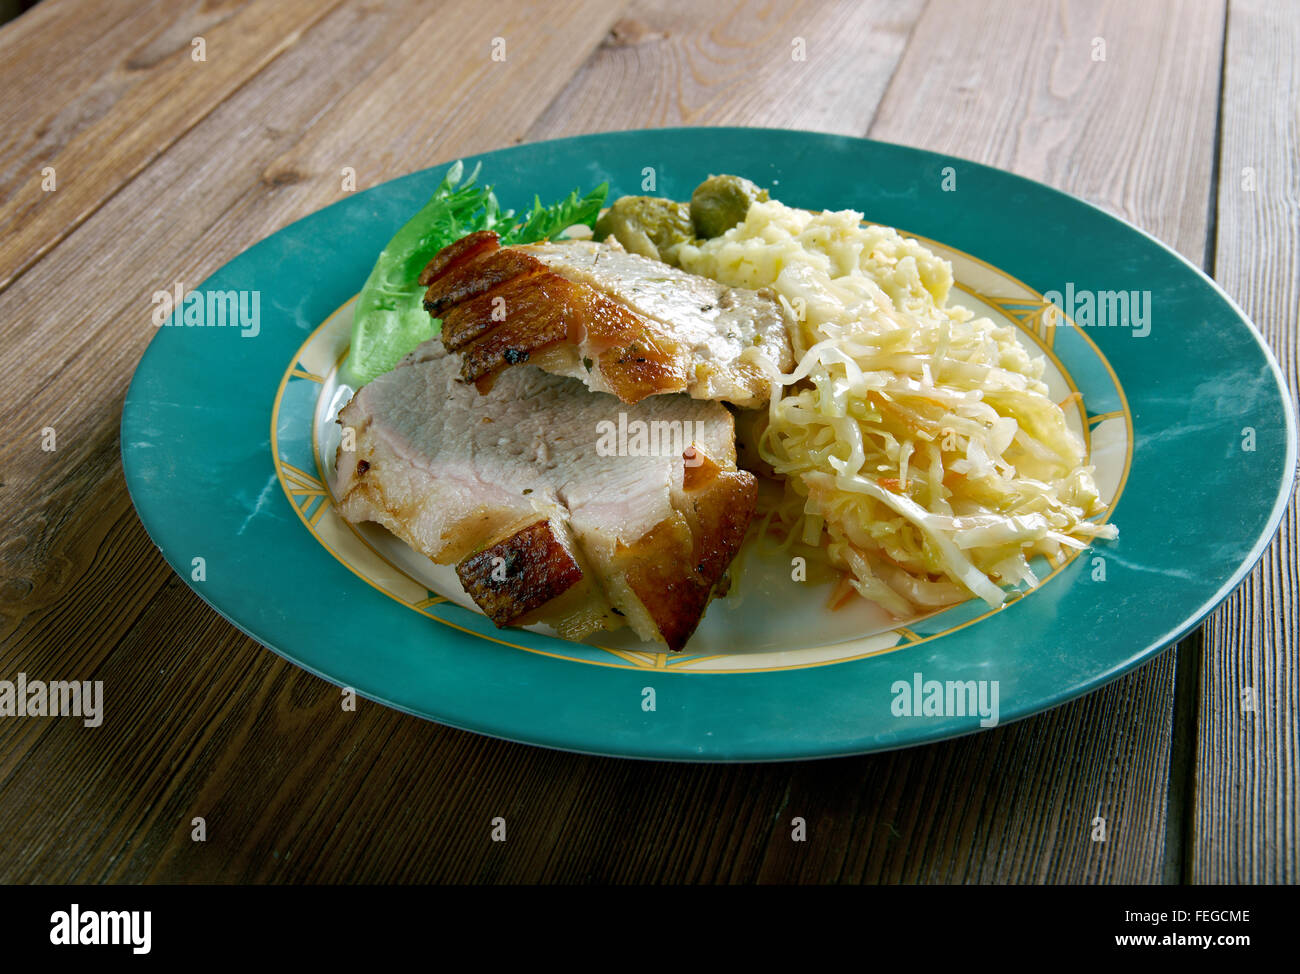 Krustenbraten - Roast pork with crackling in beer.German cuisine Stock Photo